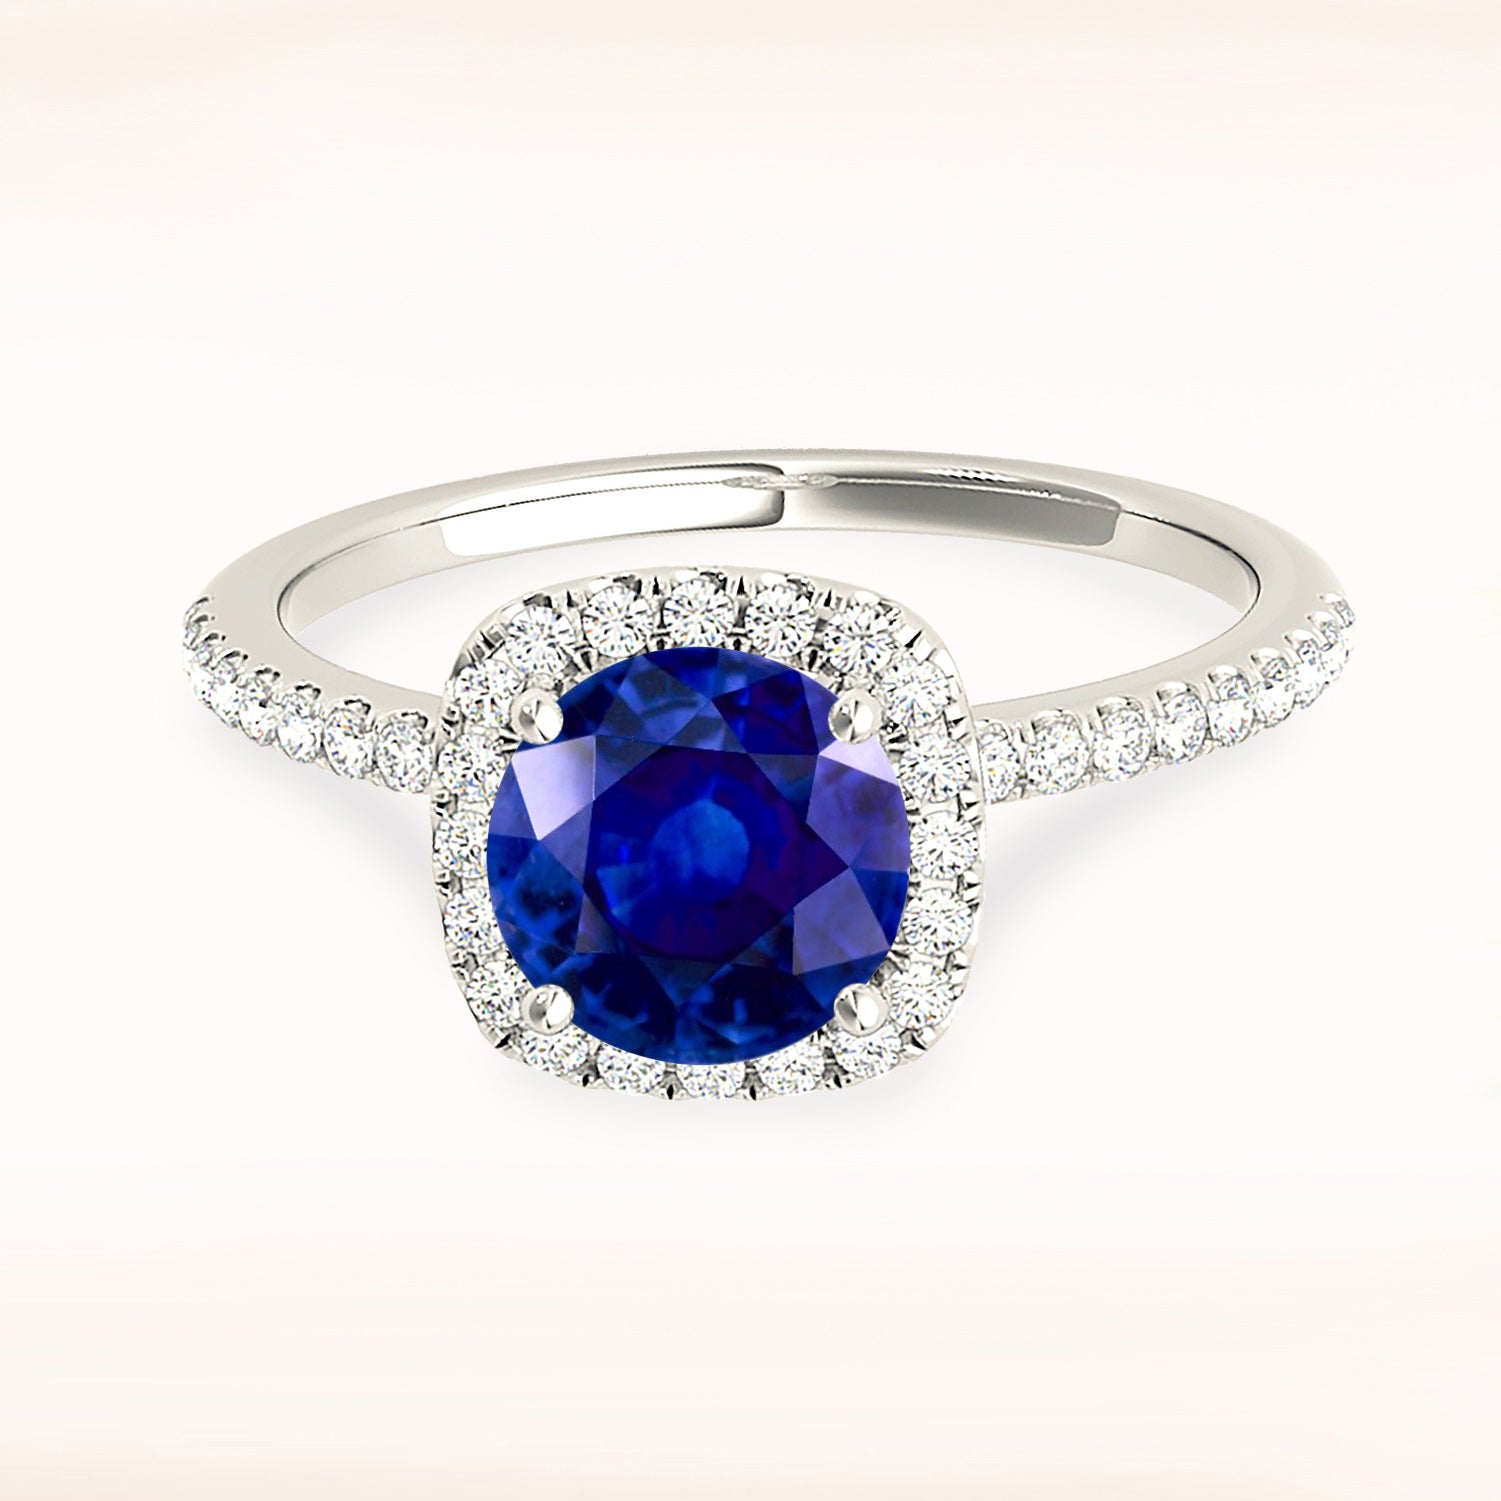 1.35 ct. Genuine Blue Round Sapphire Ring With 0.20 ctw. Diamond Cushion Halo, Dainty Diamond Band | Natural Sapphire And Diamond Ring-in 14K/18K White, Yellow, Rose Gold and Platinum - Christmas Jewelry Gift -VIRABYANI